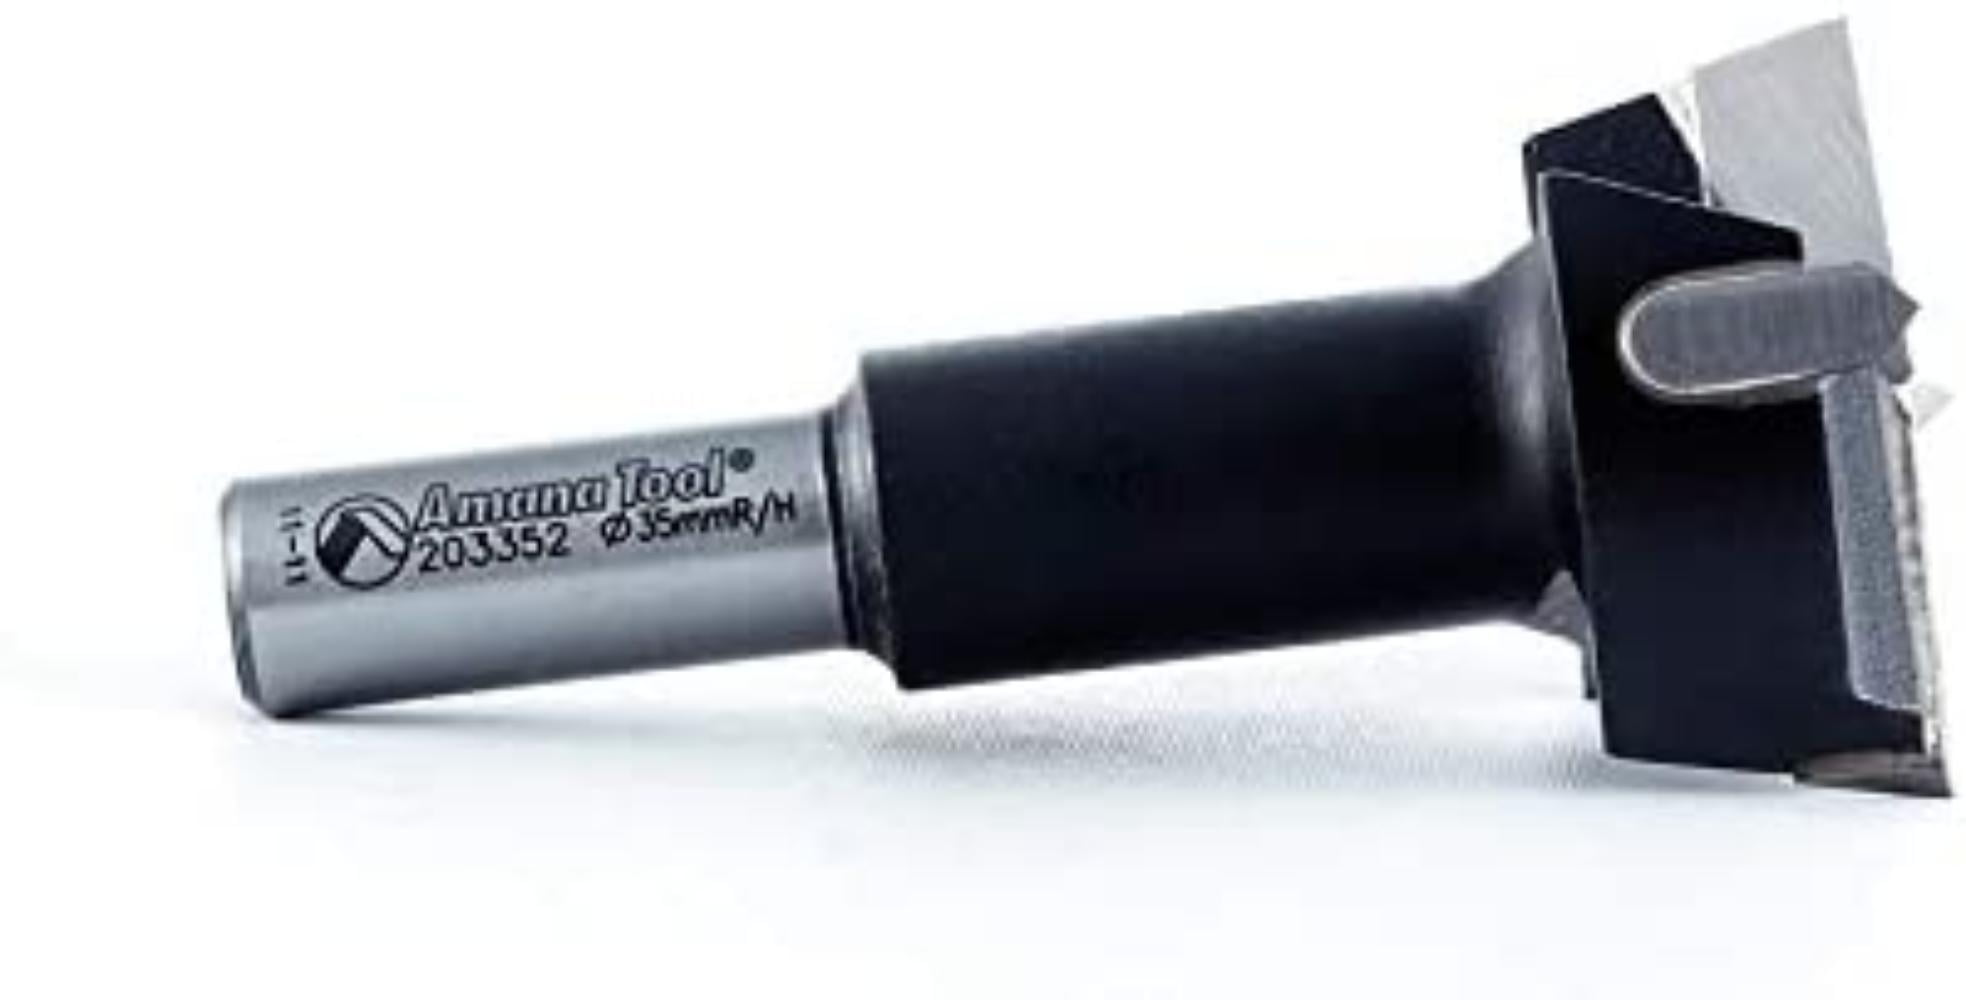 203352 Carbide Tipped Hinge Boring Bit R/H 35mm Dia x 70mm Long x 10mm Shank Amana Tool